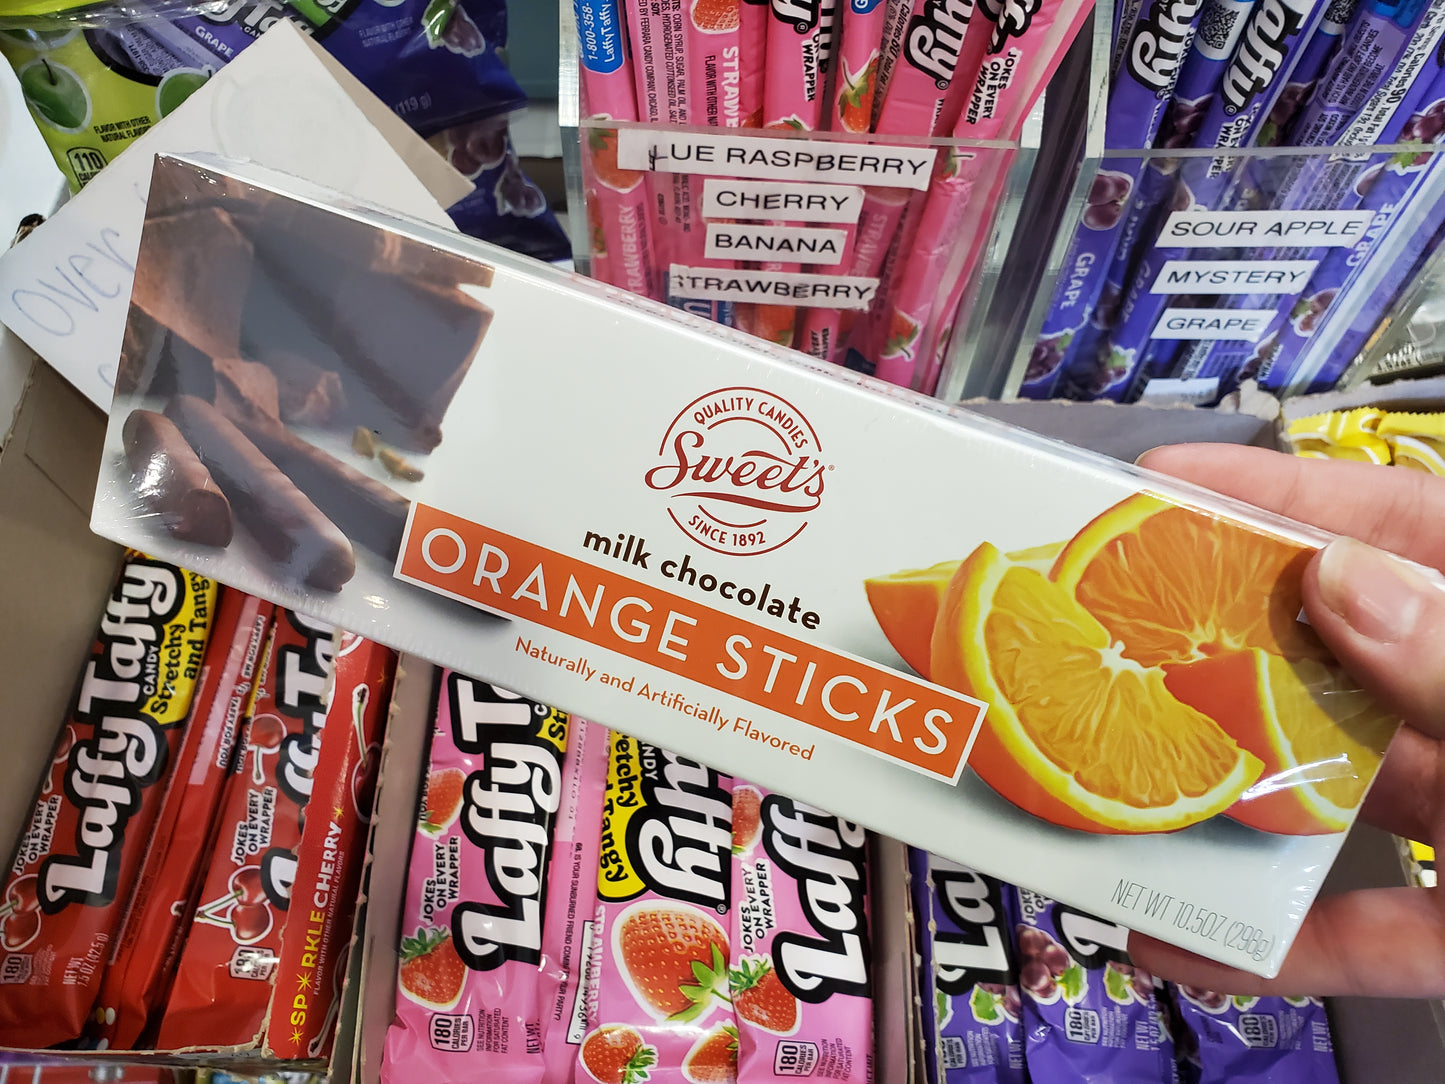 Sweet's Orange Sticks